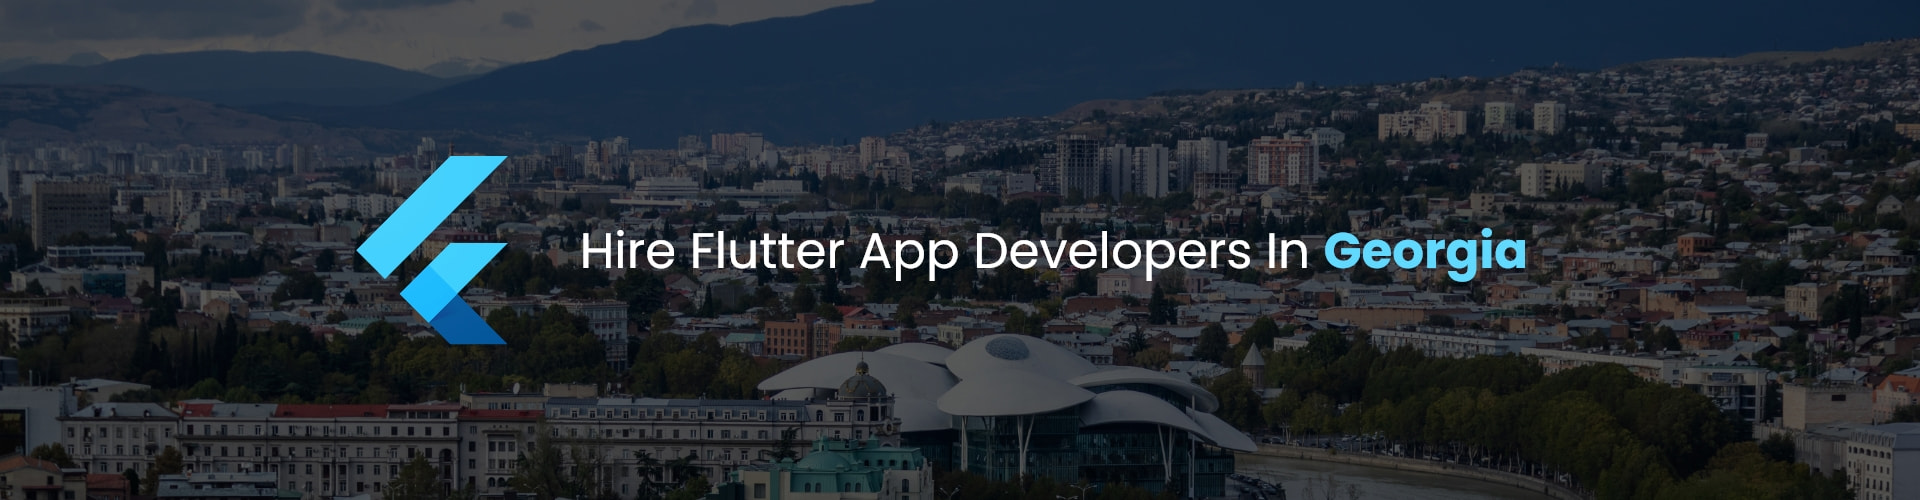 hire flutter app developers in georgia